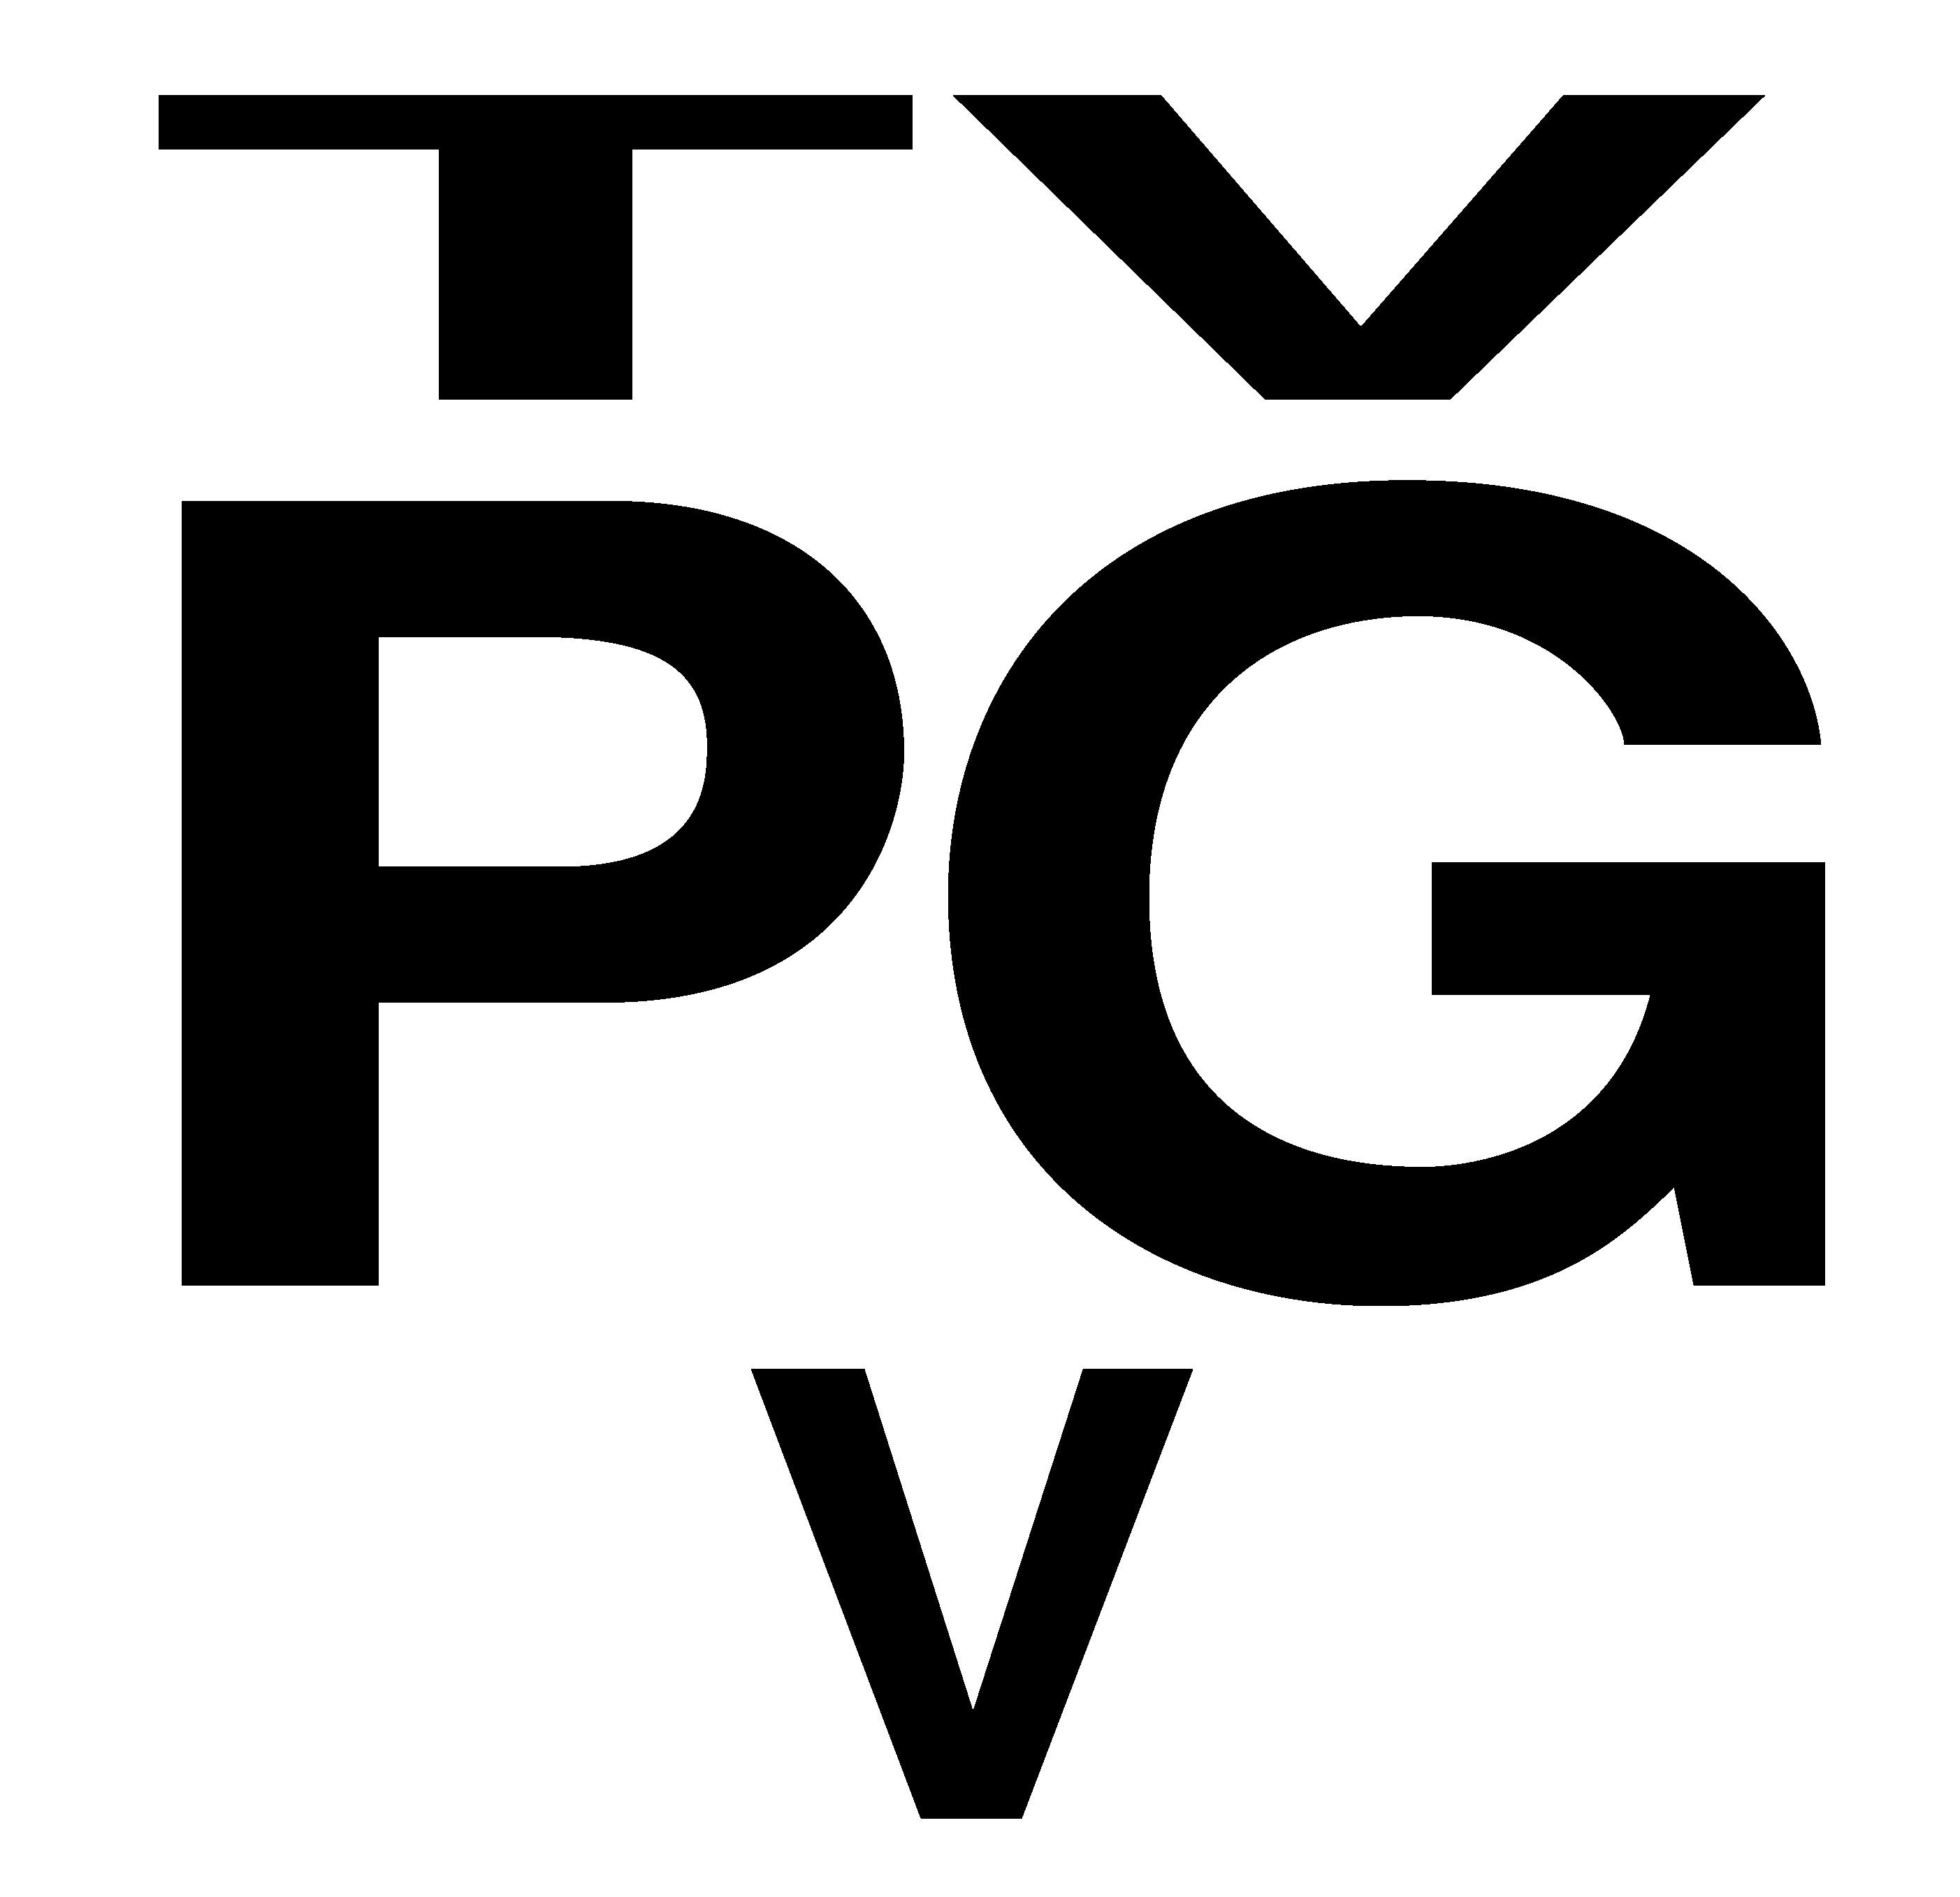 TV-MA Logo - File:White TV-PG-V icon.png - Wikimedia Commons